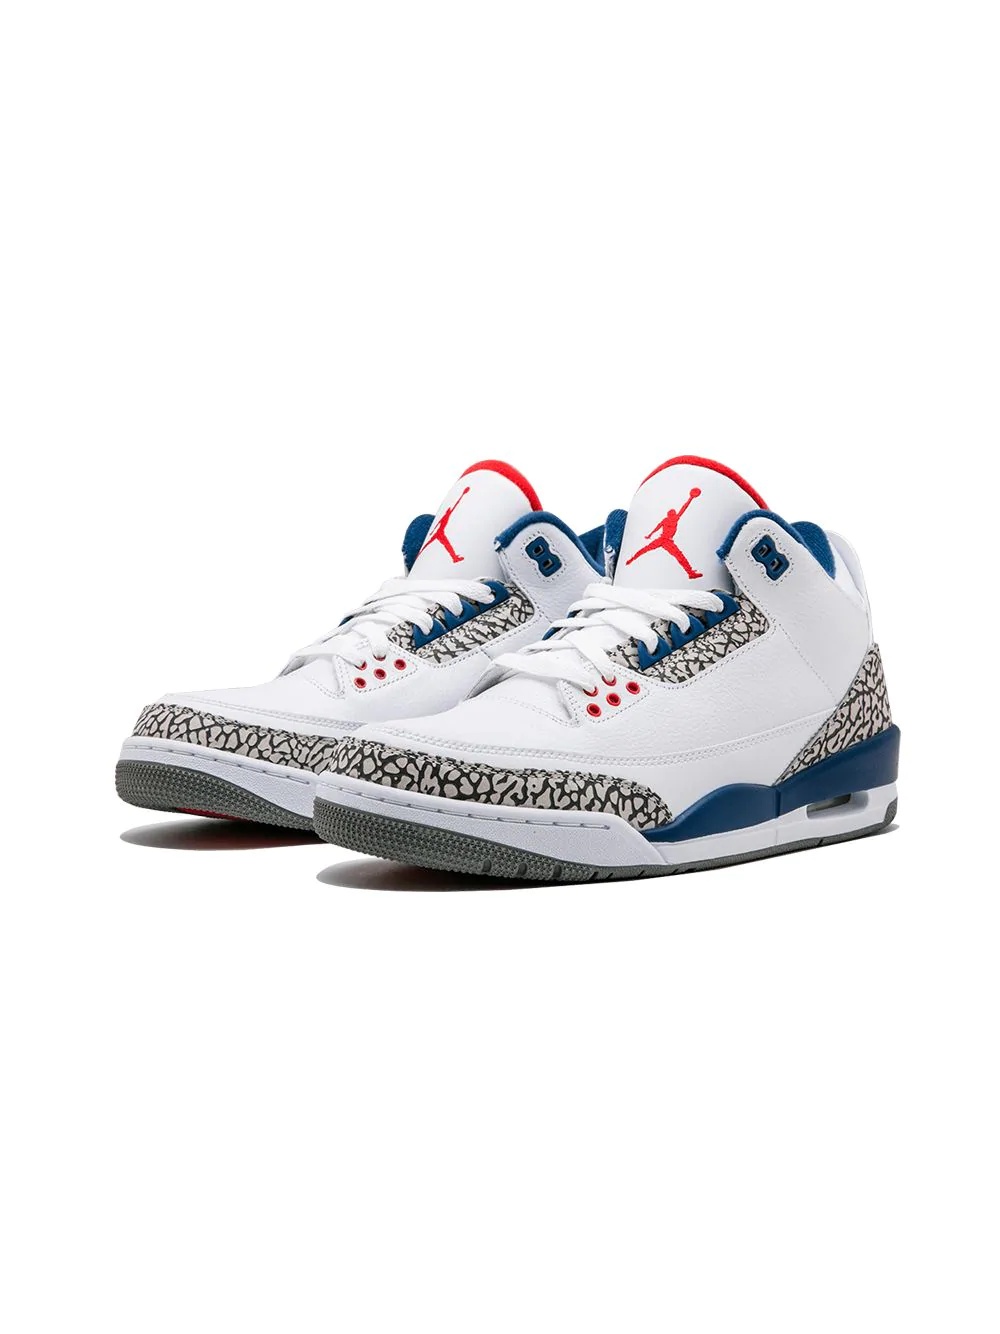 Air Jordan 3 Retro OG "True Blue" sneakers - 2